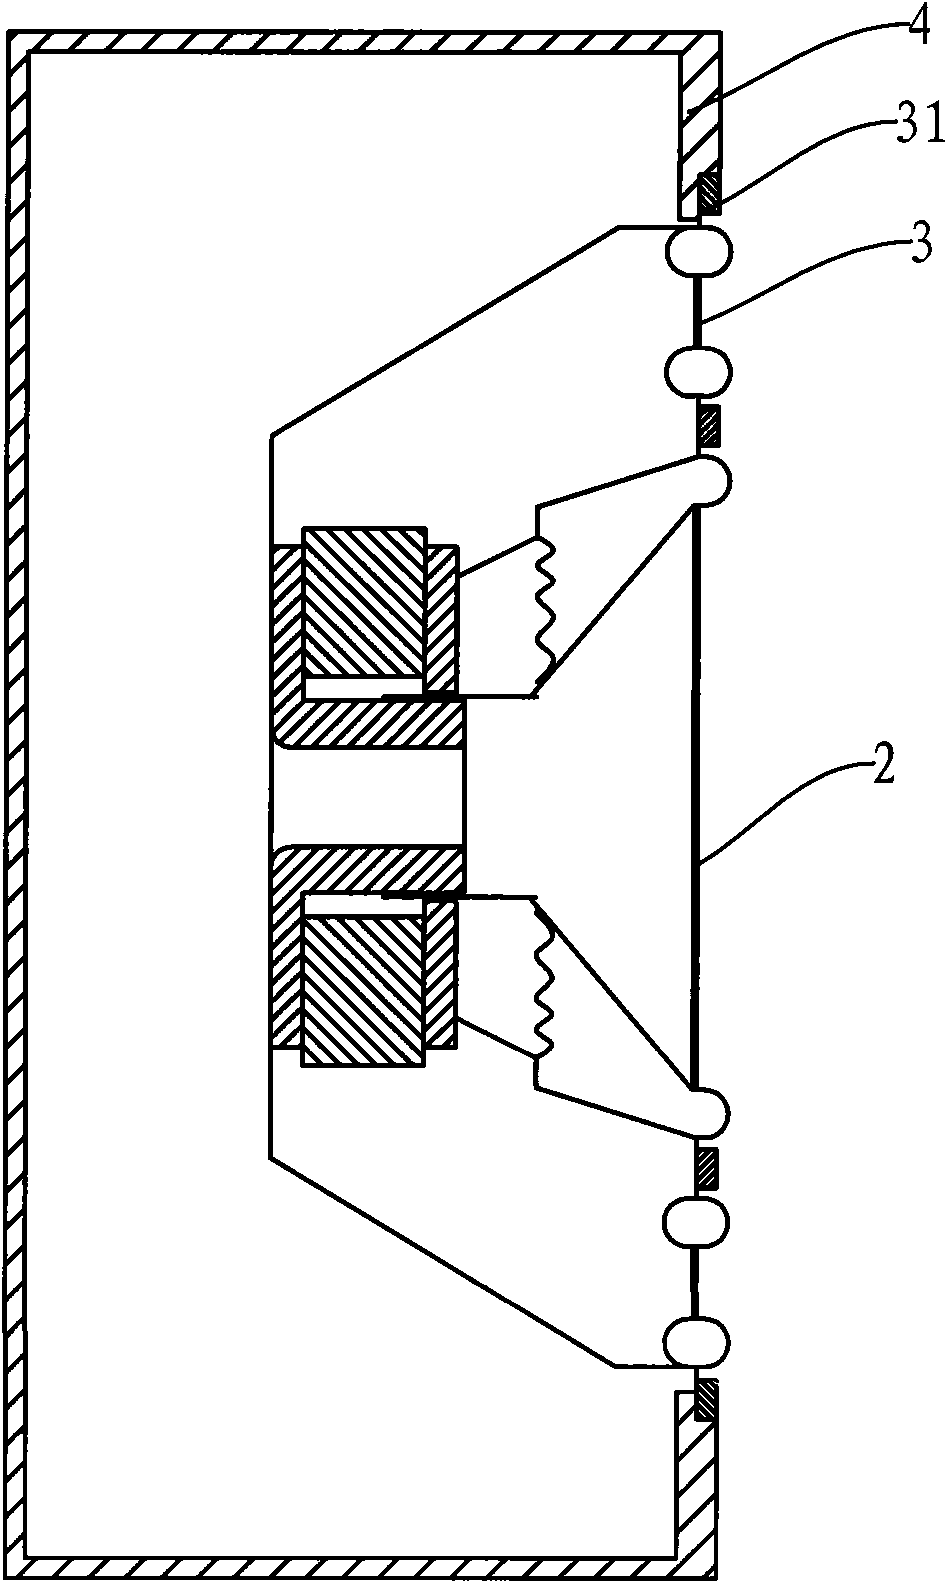 Passive radiator loudspeaker system